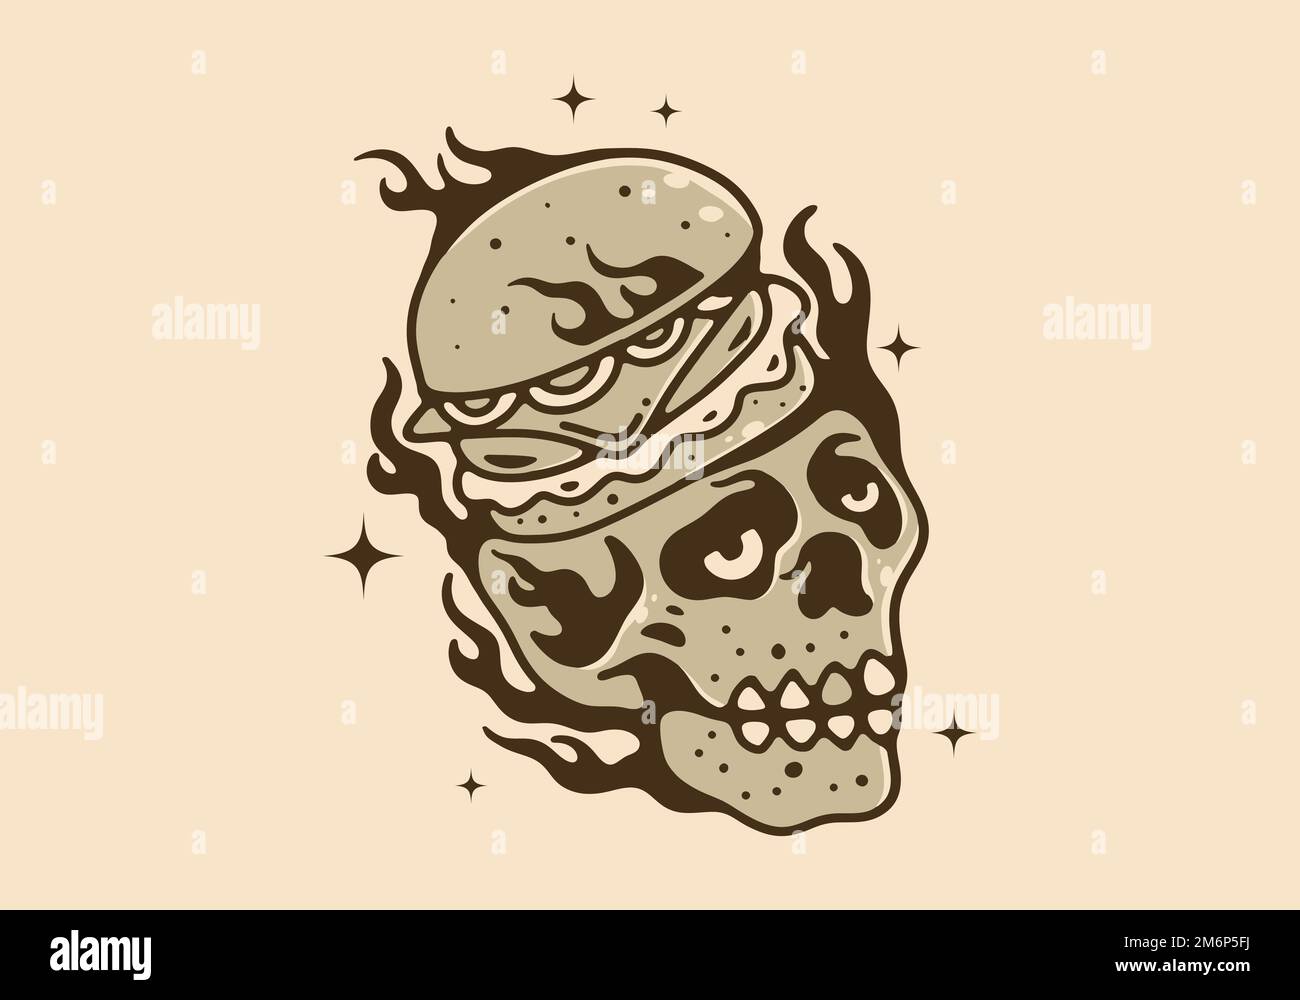 Illustration drawing design of burger on a skull Stock Vector